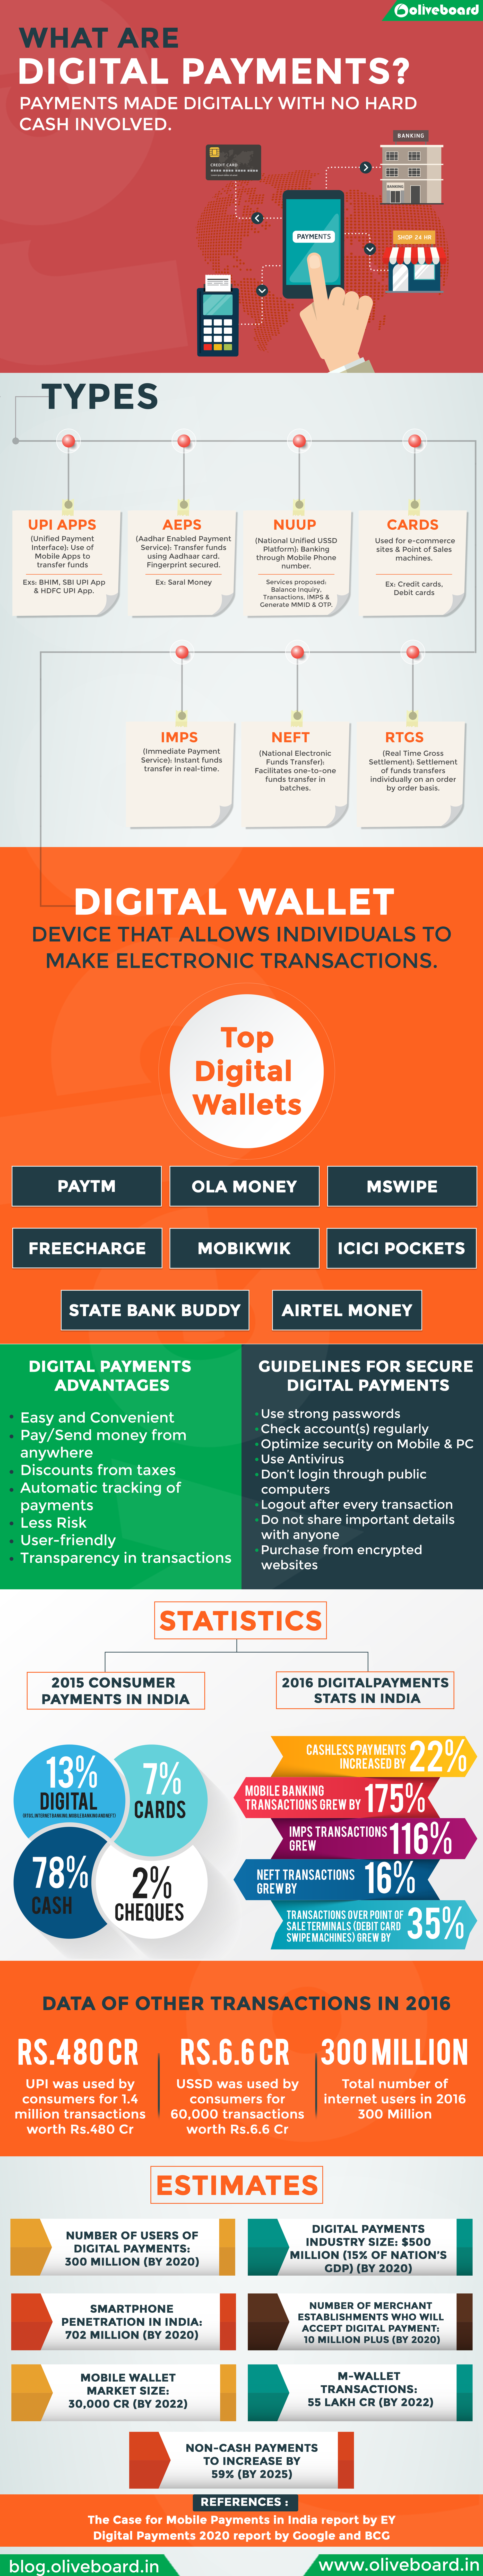 Digital Payments India: Description, Types, Statistics [Infographic]